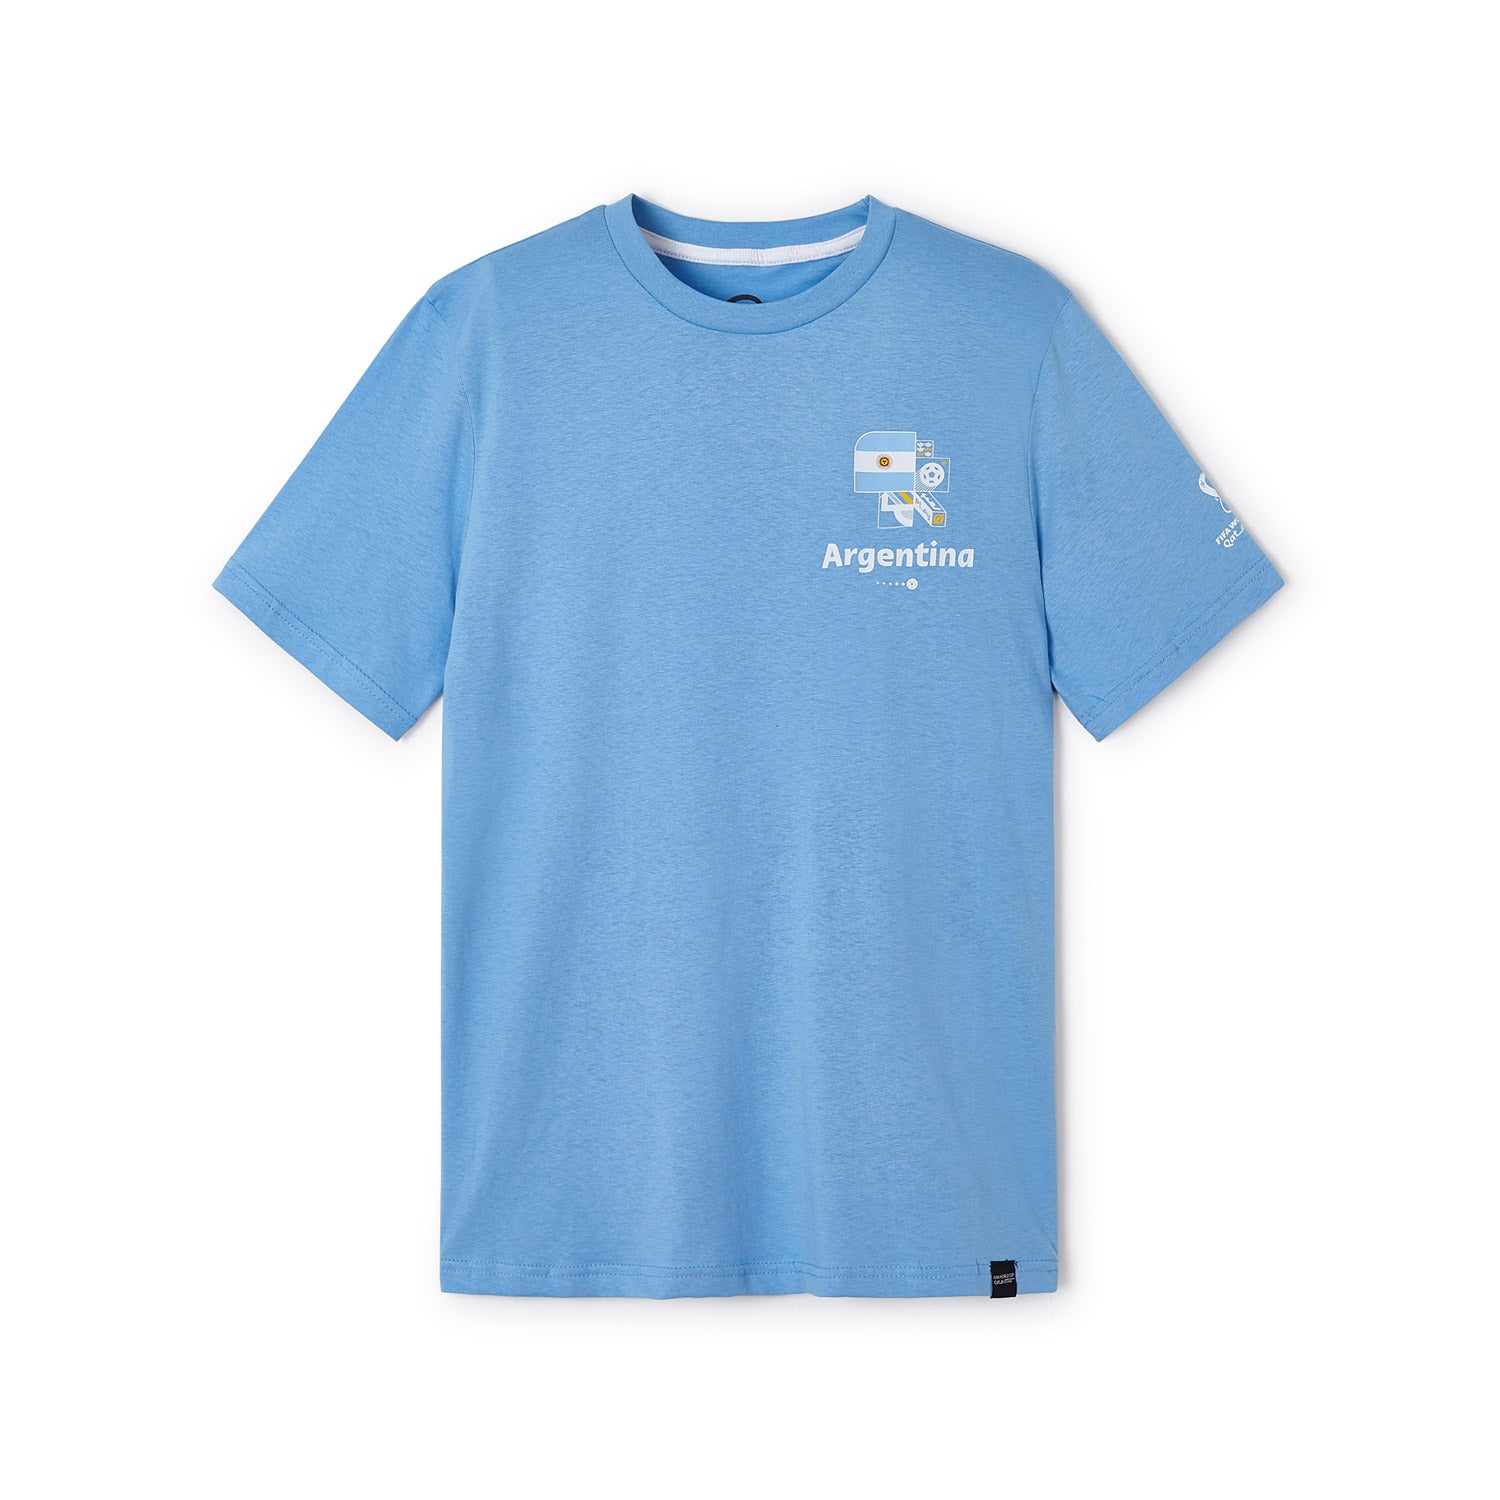 2022 World Cup Argentina Blue T-Shirt - Men's - Official FIFA Store